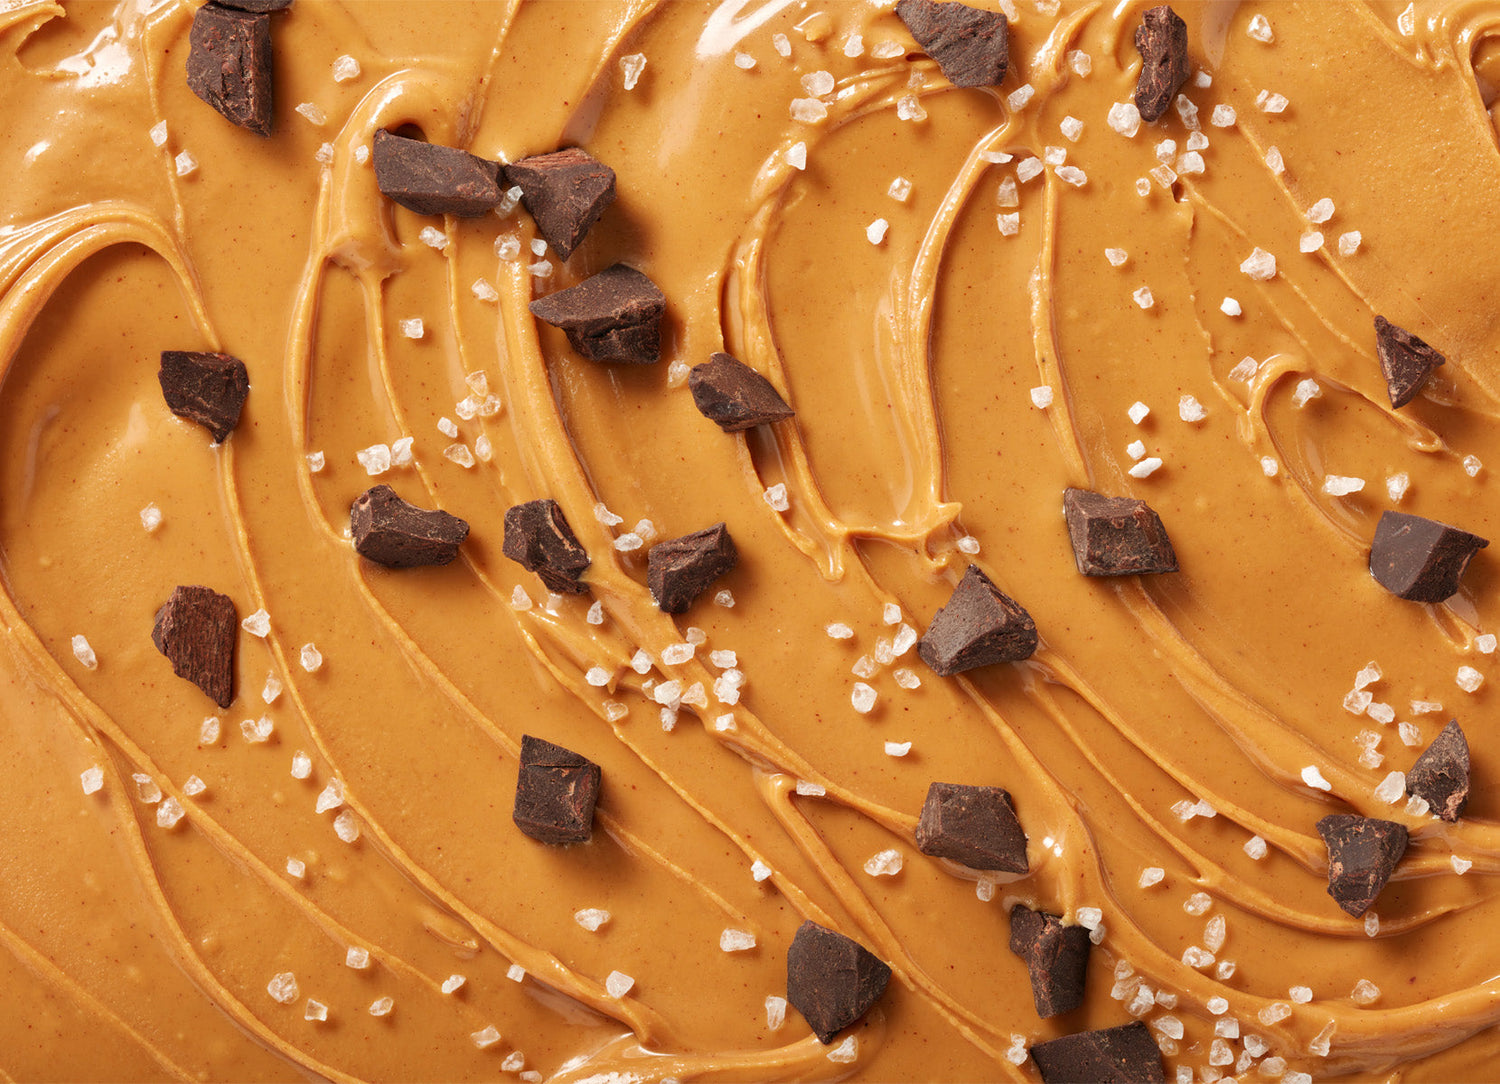 Peanut Butter Dark Chocolate & Sea Salt "New and Improved Glo" Vegan Protein Bars